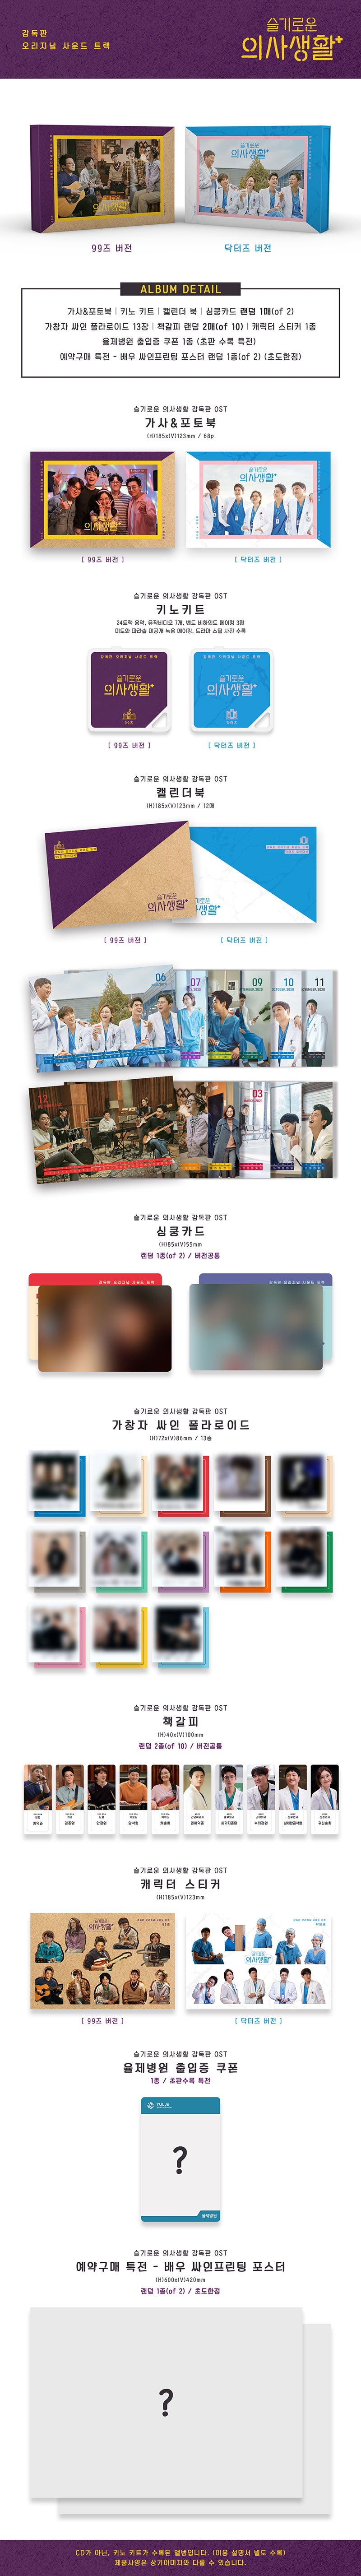 Hospital Playlist OST Kit Album - tvN Drama